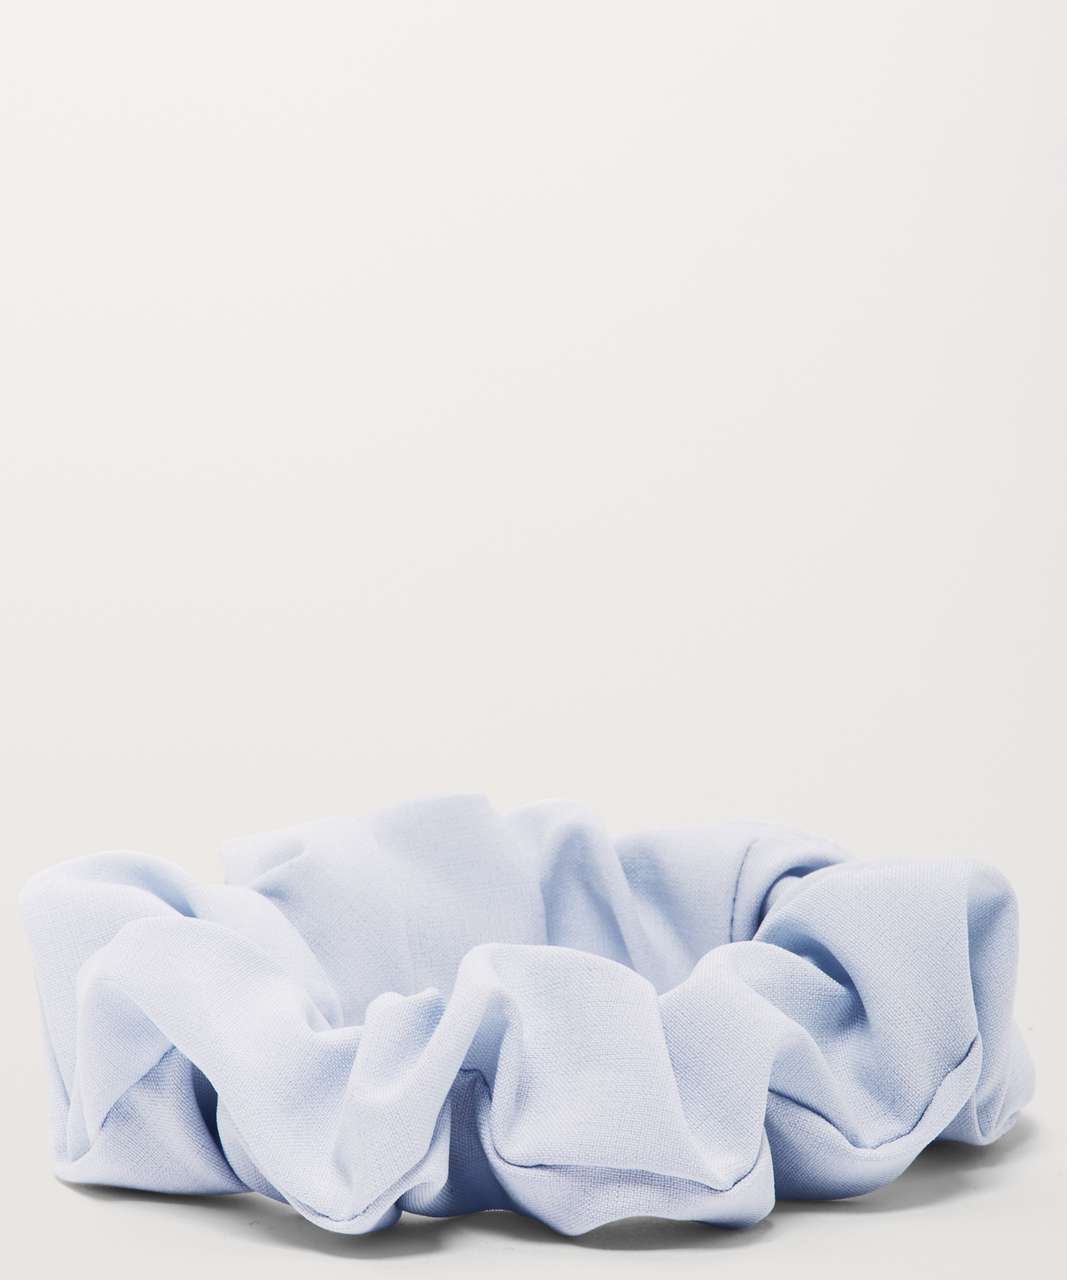 Lululemon Uplifting Scrunchie - Serene Blue (First Release)